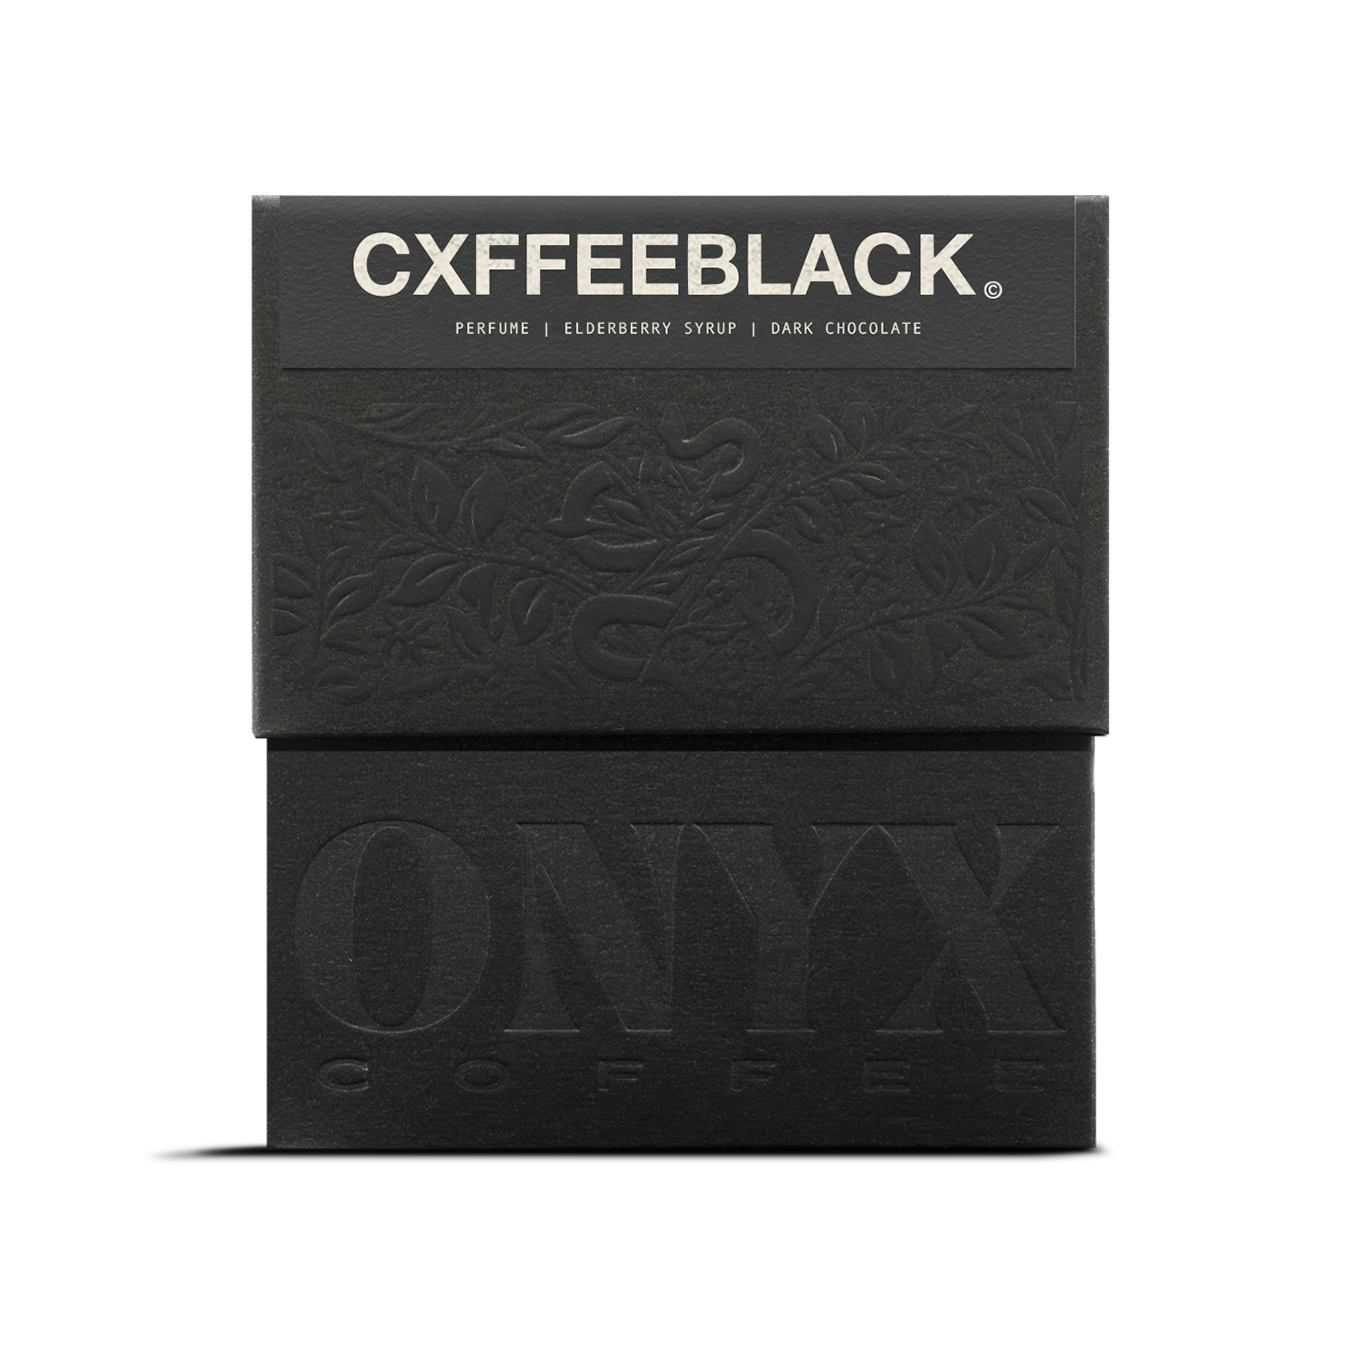 Coffee – Onyx Coffee Lab